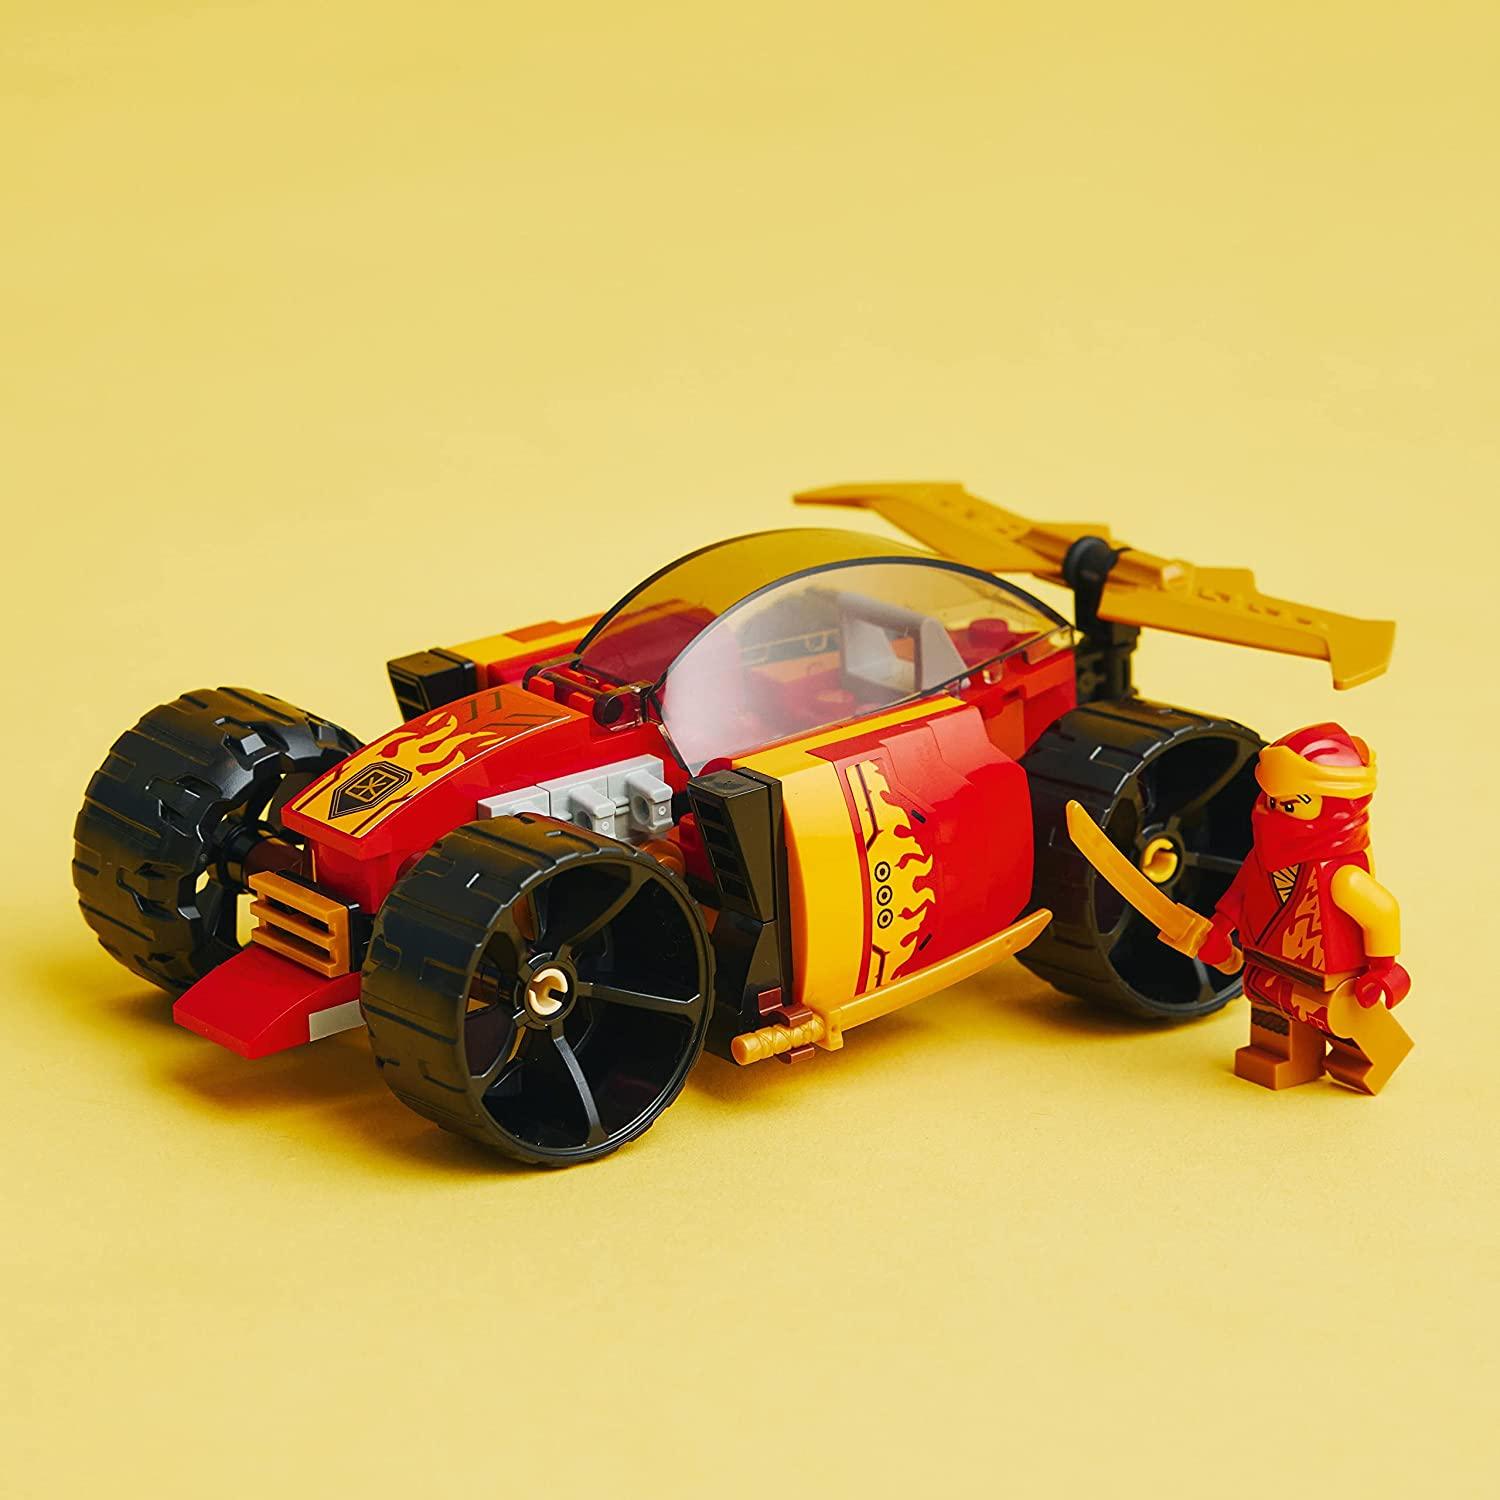 LEGO NINJAGO Kai’s Ninja Race Car EVO 71780 Building Toy Set for Kids, Boys, and Girls Ages 6+ (94 Pieces) - BumbleToys - 5-7 Years, Boys, LEGO, Ninjago, OXE